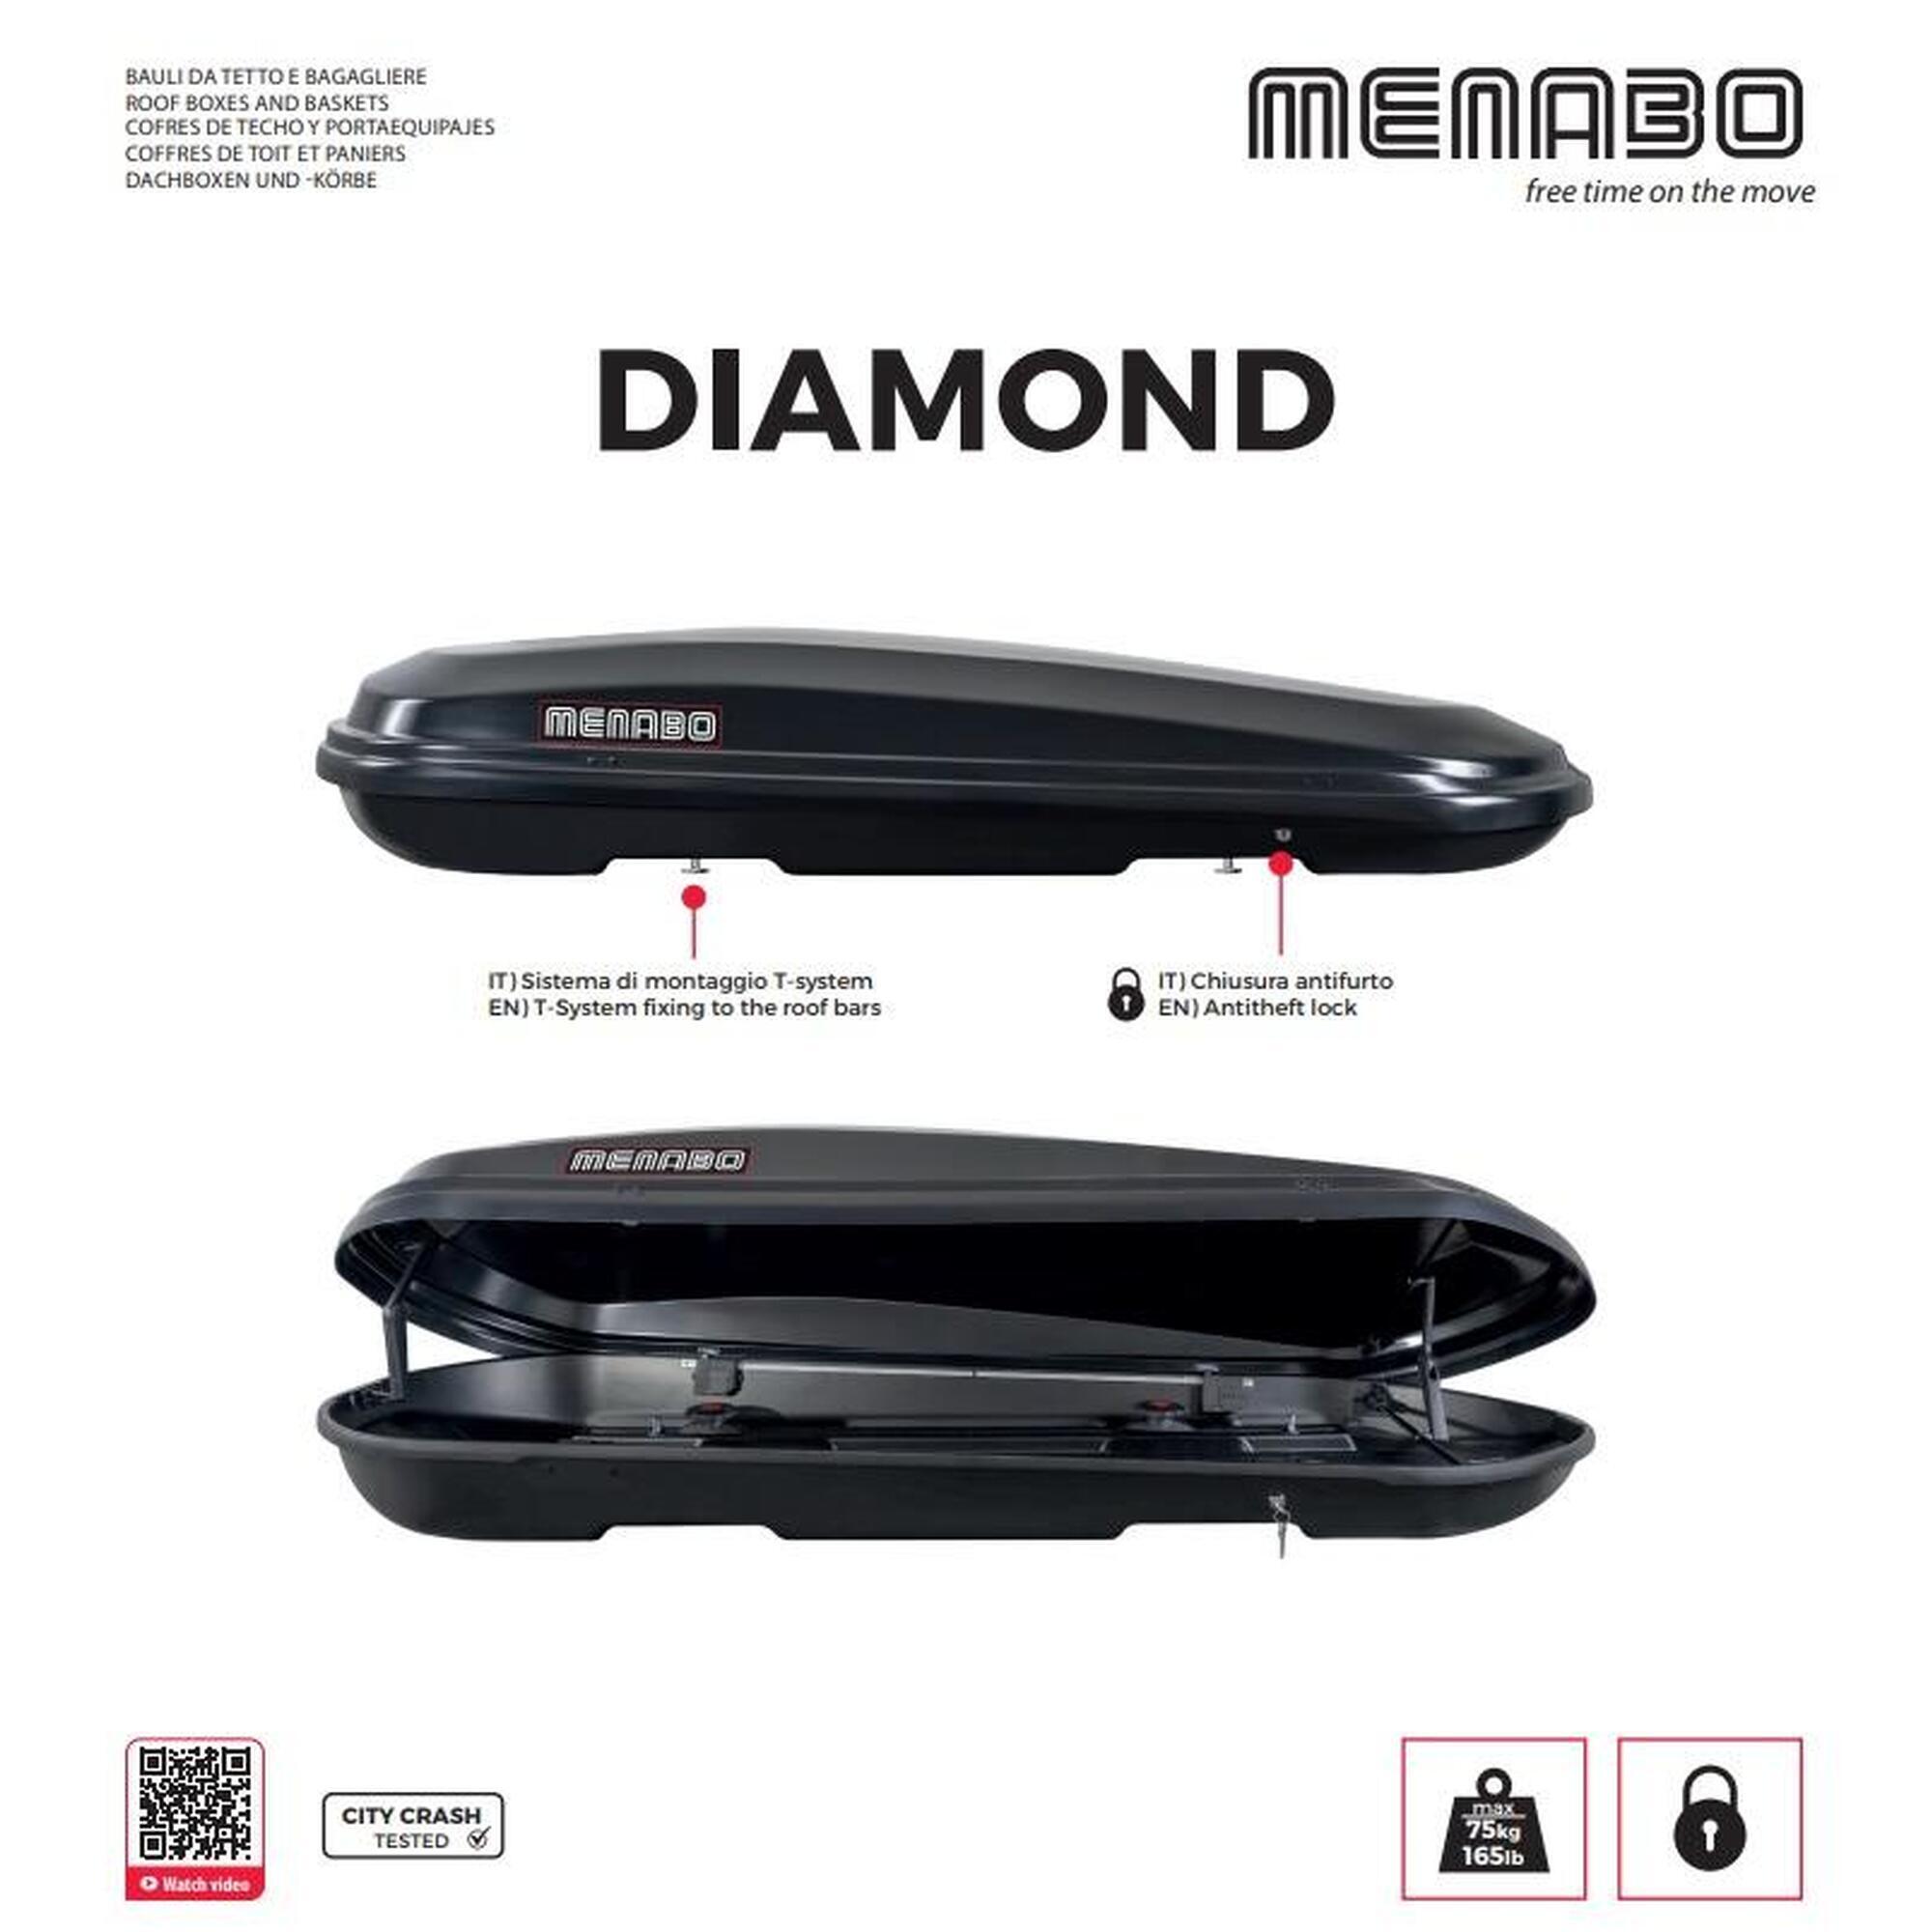 Cutie portbagaj Menabo Diamond 500 Black, 209x79x36cm